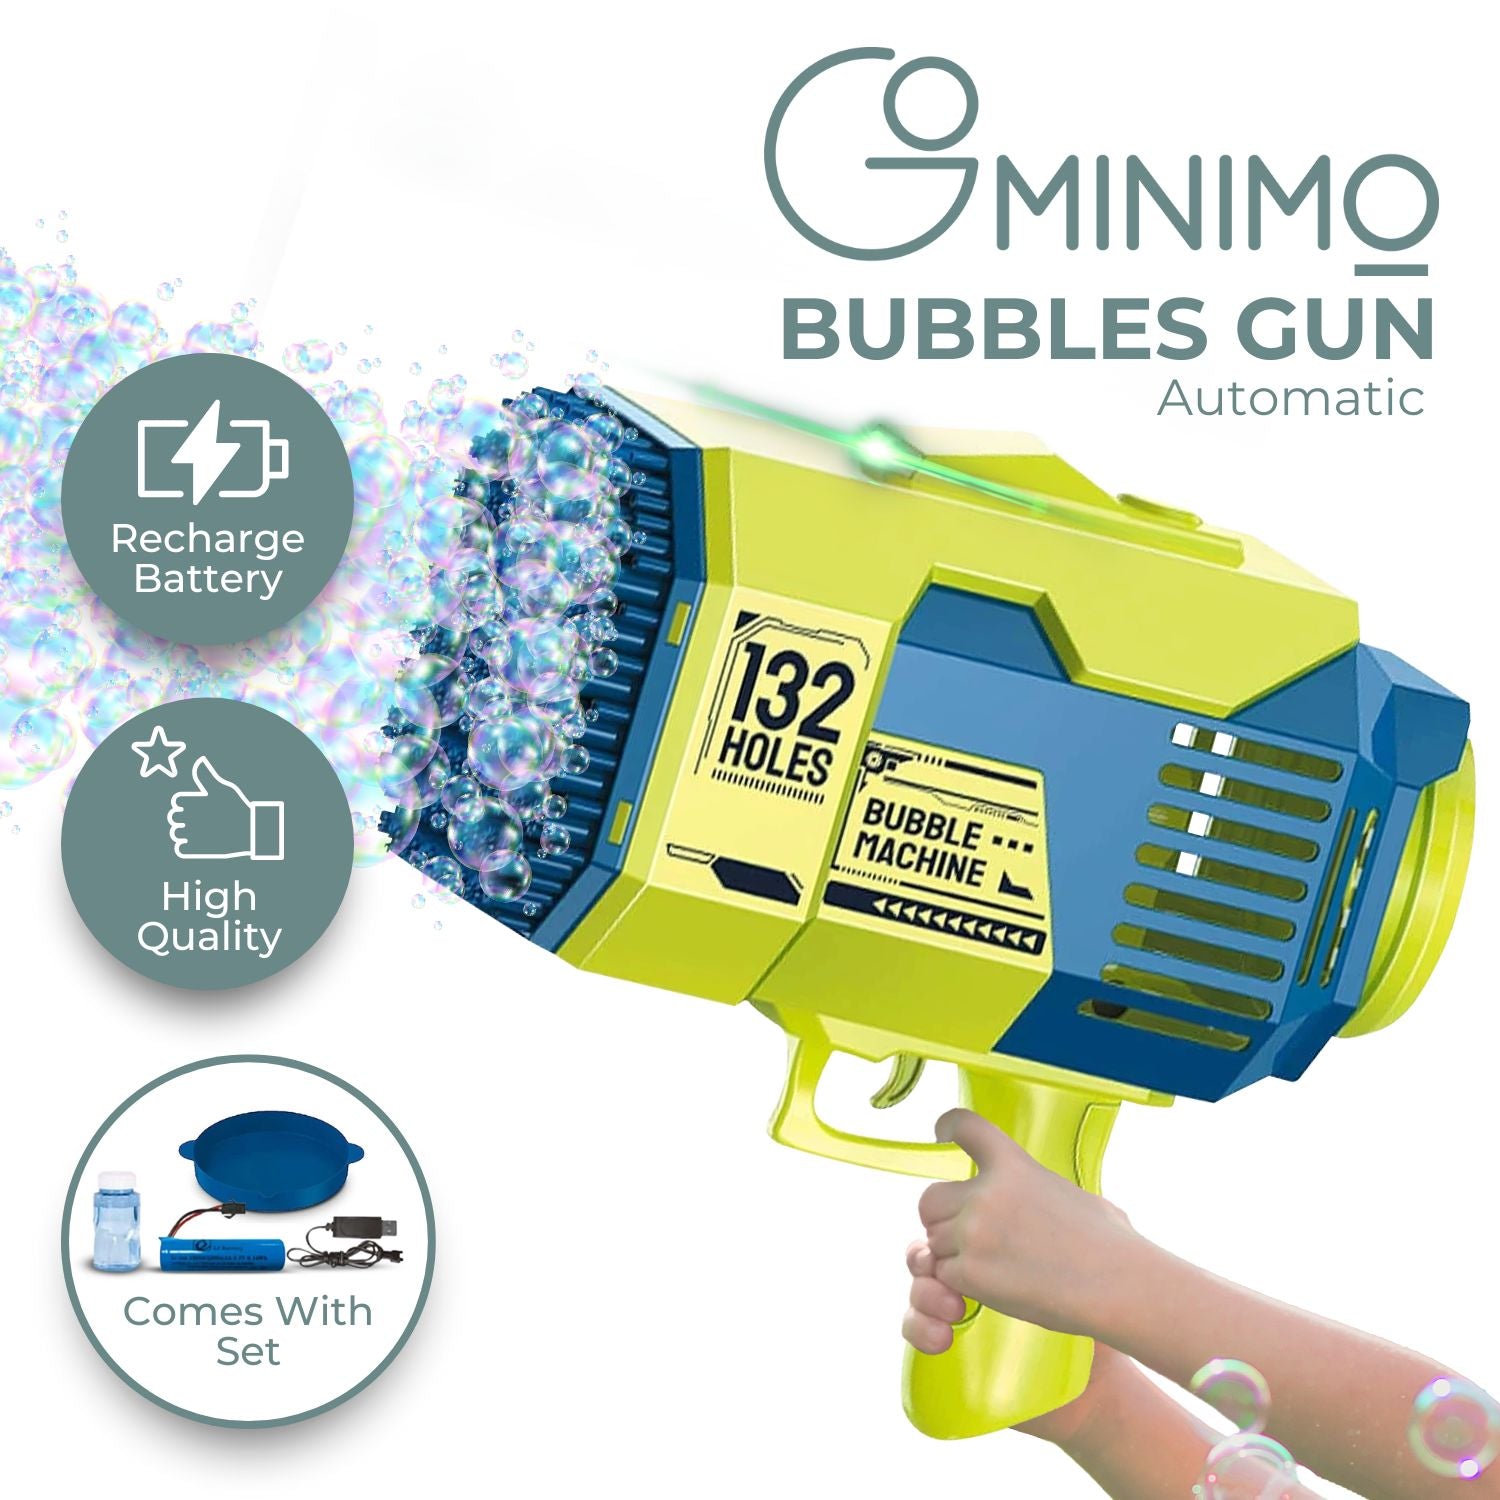 GOMINIMO 132 Holes Bubbles Machine Gun for Kids (Dark Blue and Green) - 0